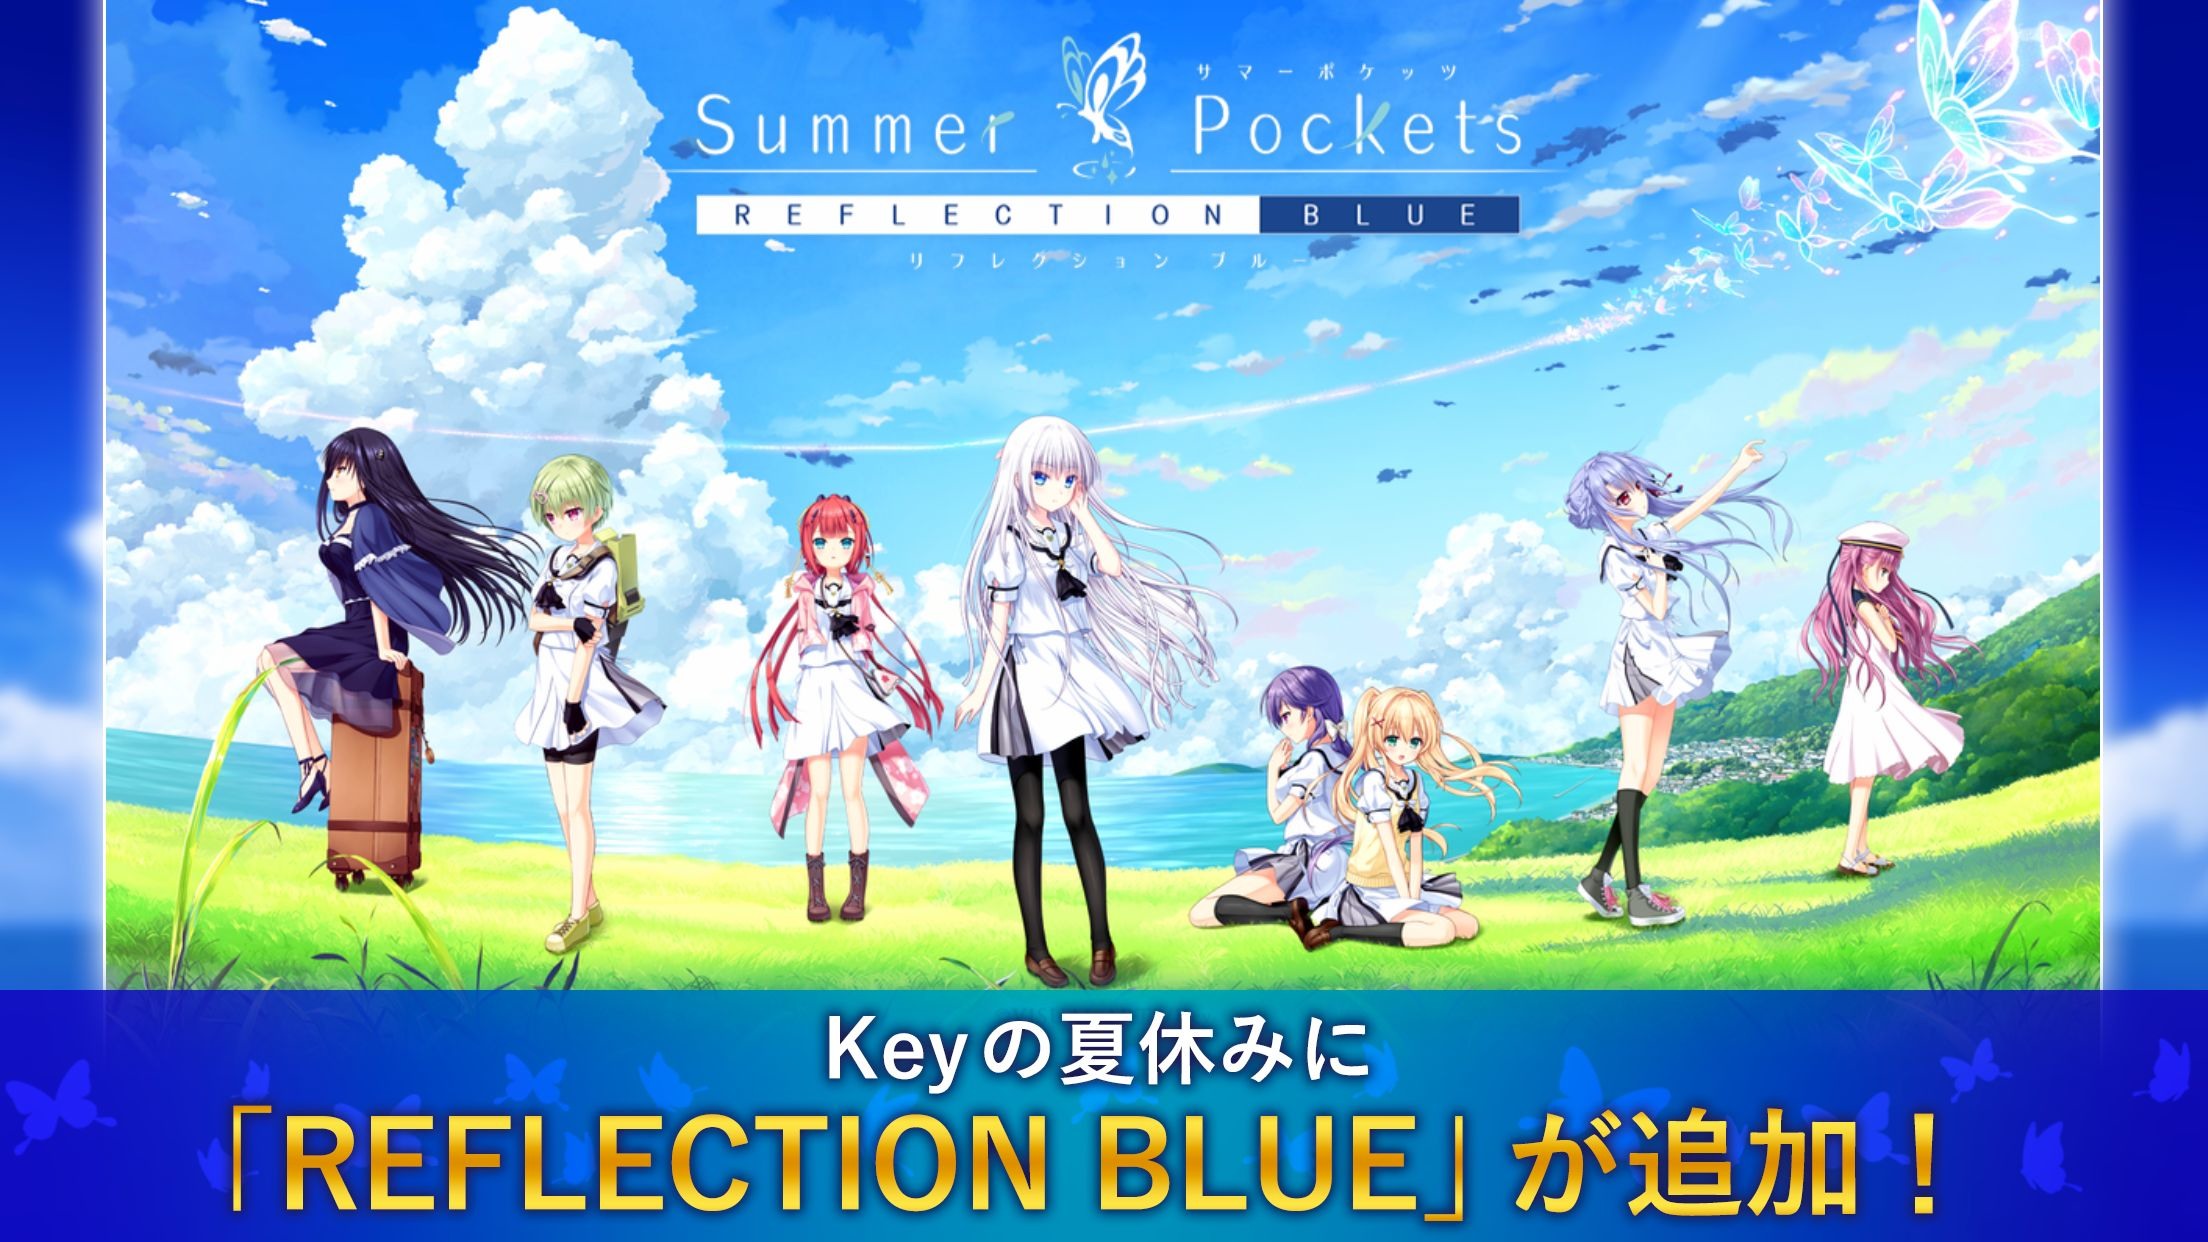 Summer Pockets REFLECTION BLUE》於手機平台推出追加新女主角及路線《Summer Pockets REFLECTION  BLUE》 - 巴哈姆特